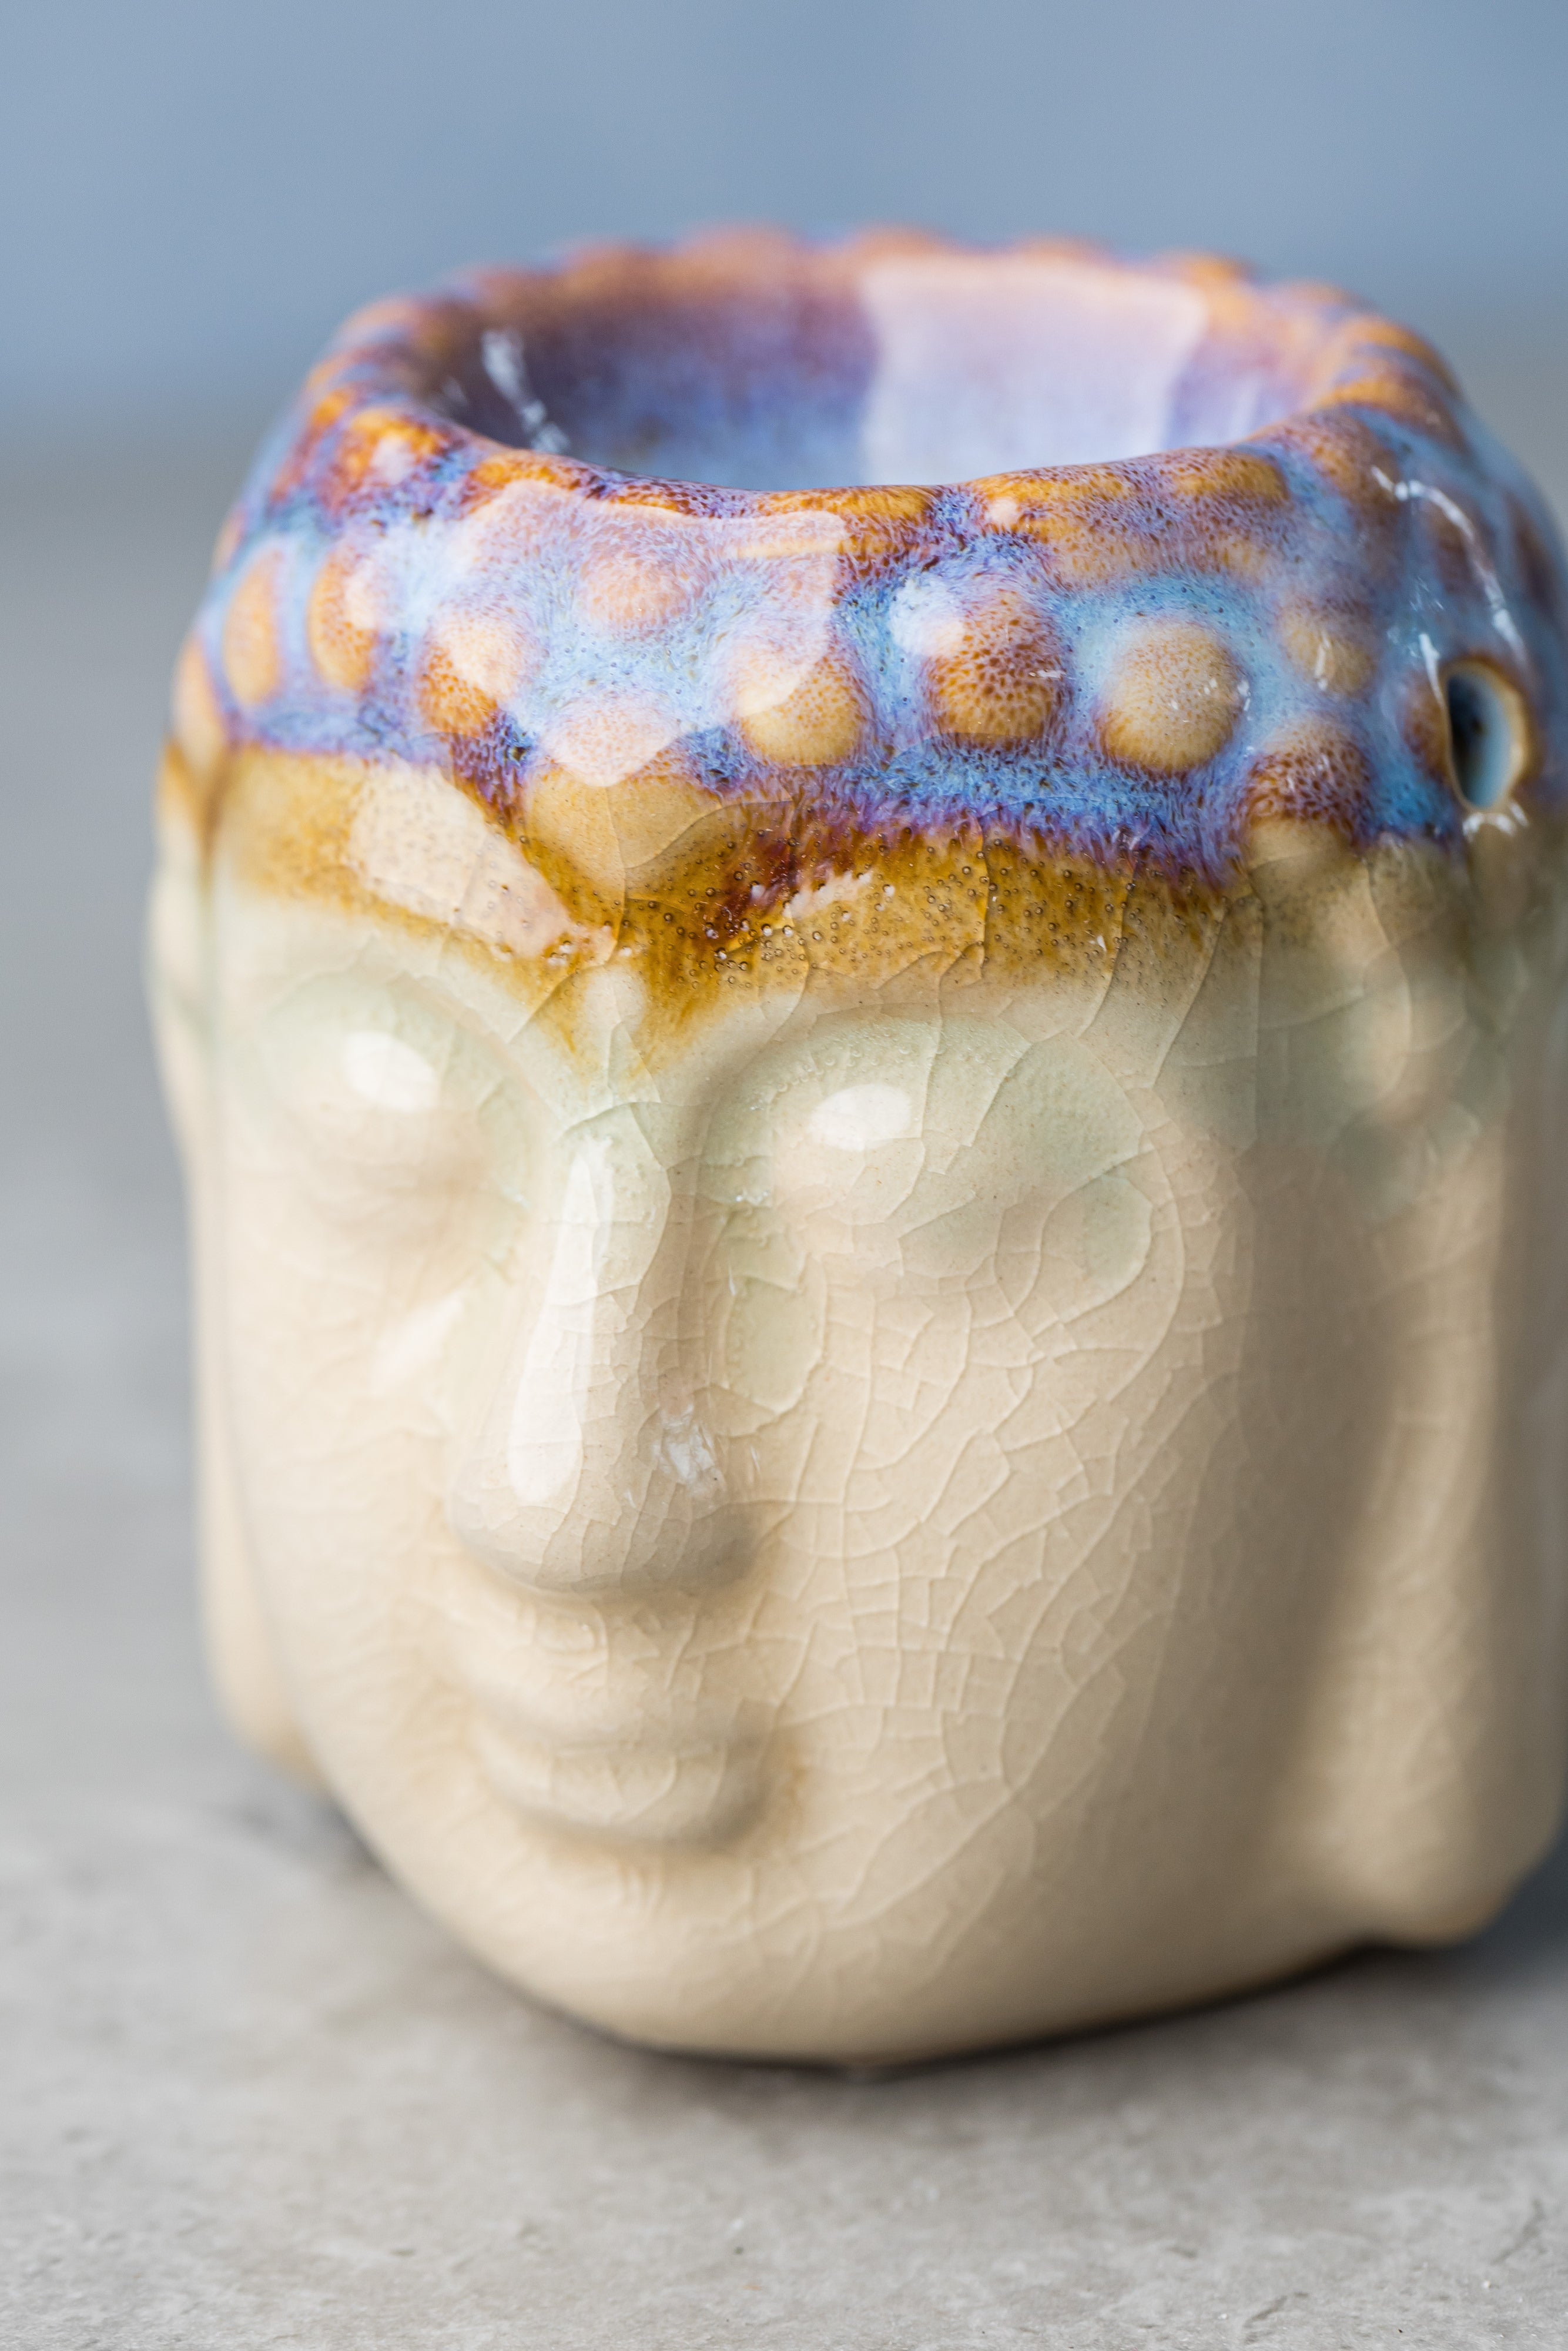 Buddha Head Ceramic Aromatherapy Oil Burner - Elegant Diffuser for Essential Oils &amp; Relaxation - Everyday Rocks